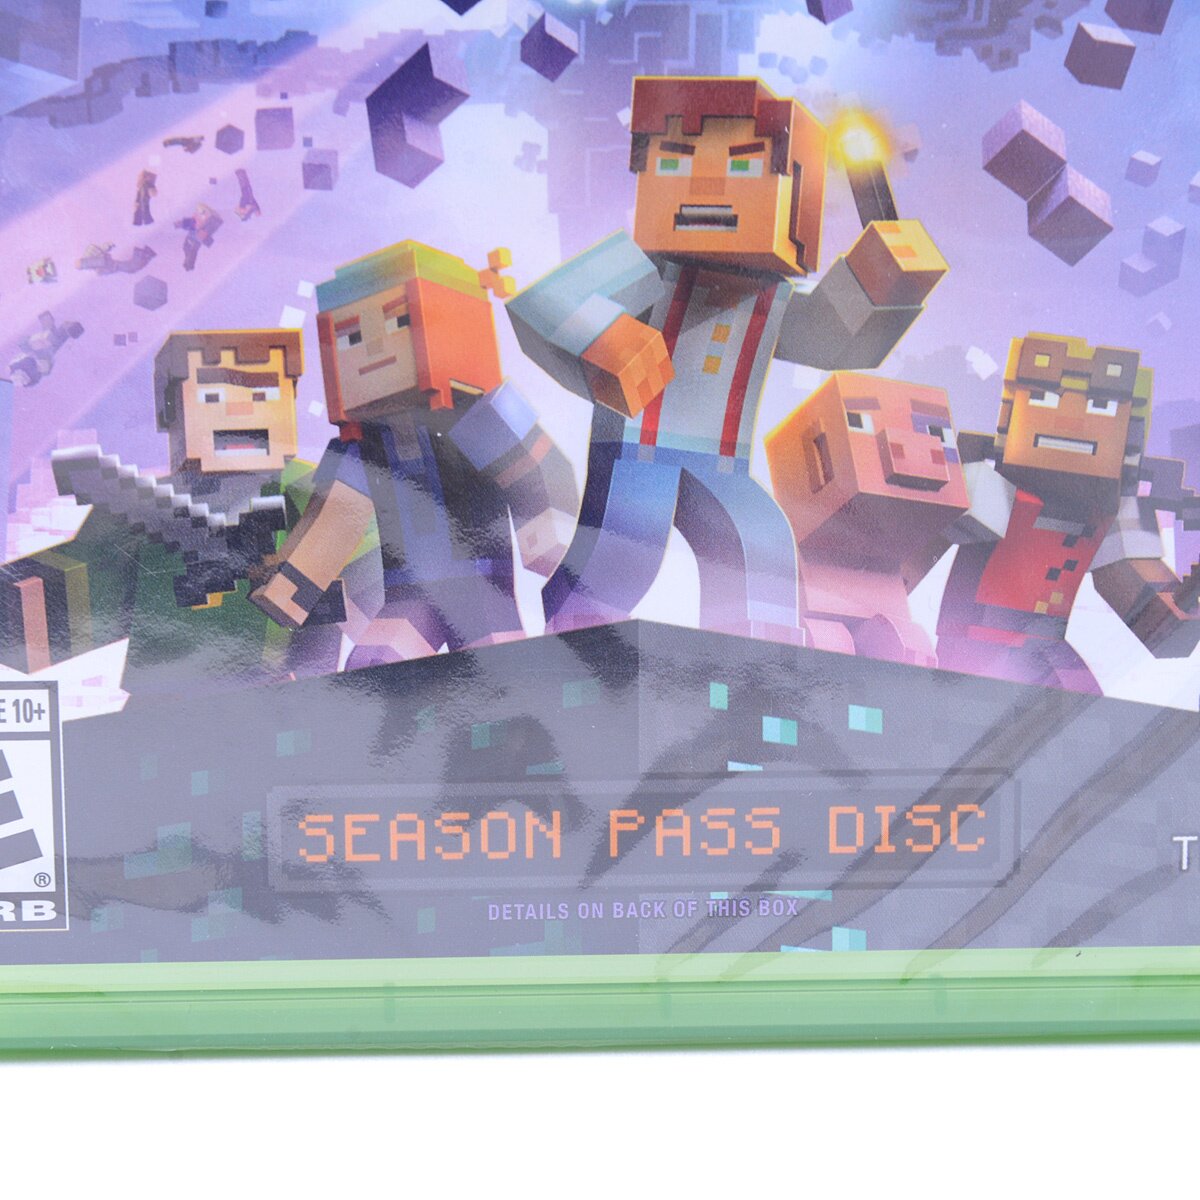 Minecraft: Story Mode Season Disc - Xbox One Game